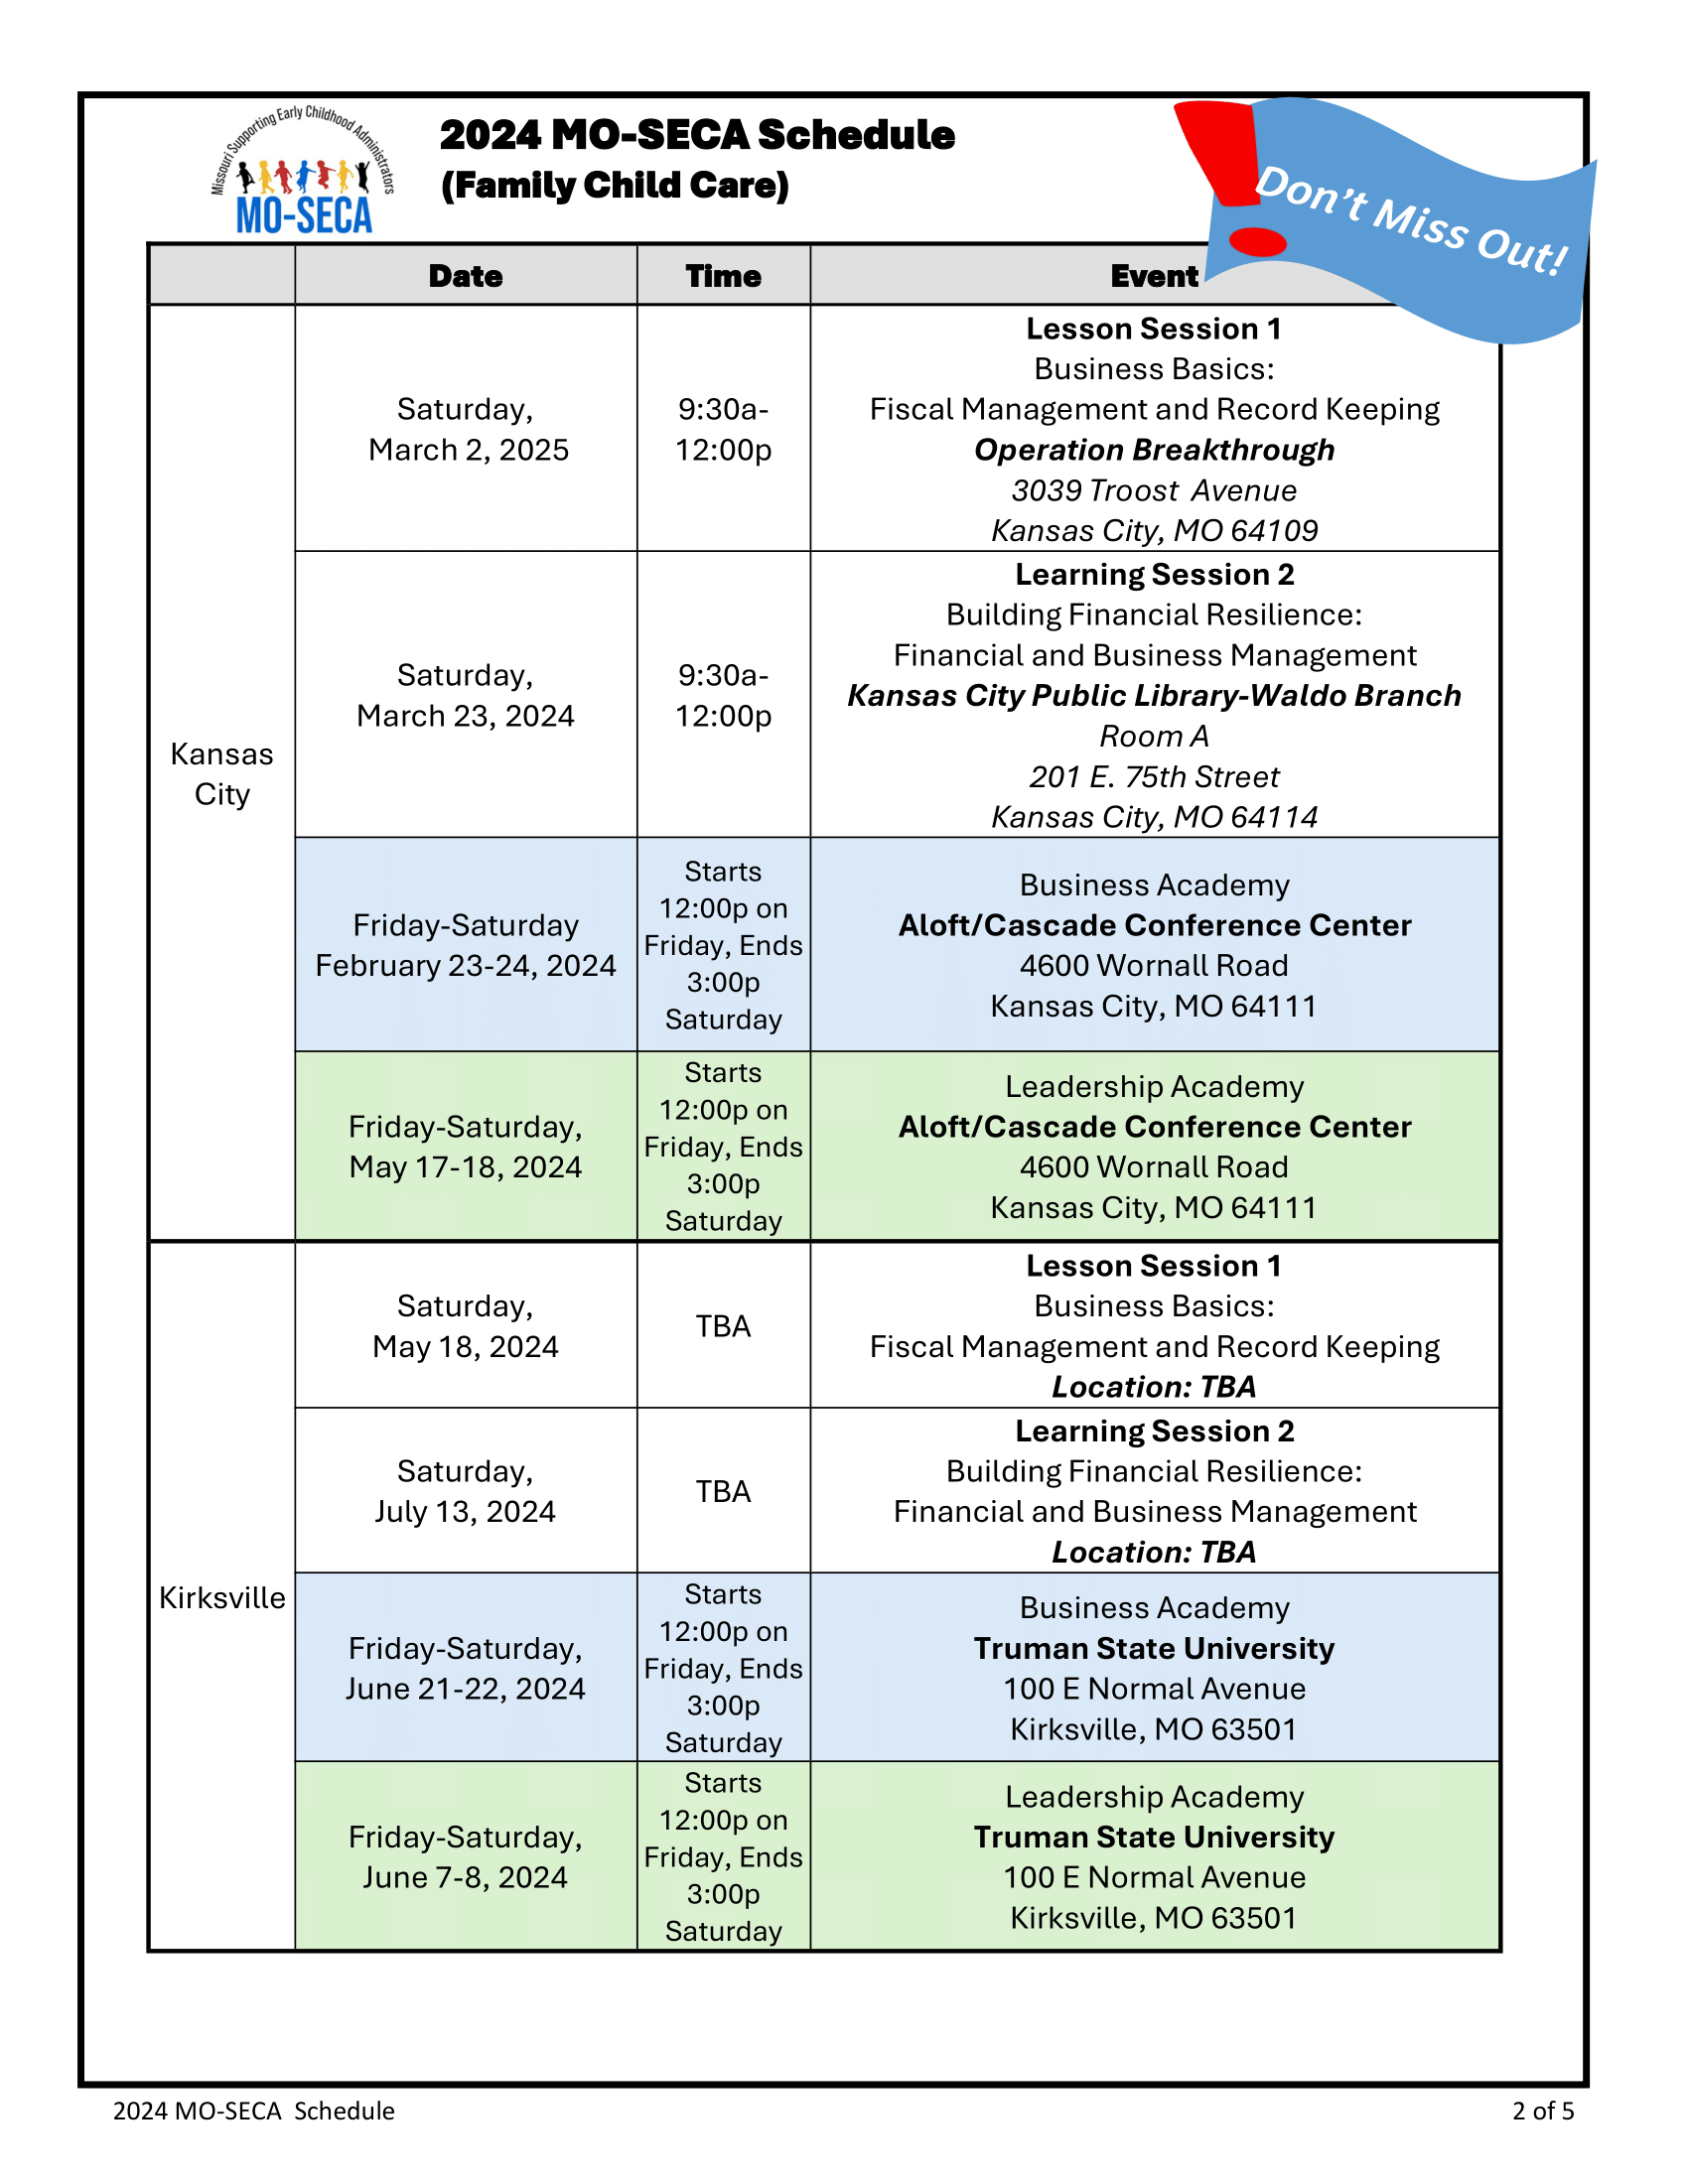 2024 Schedule-final schedule (1)-2